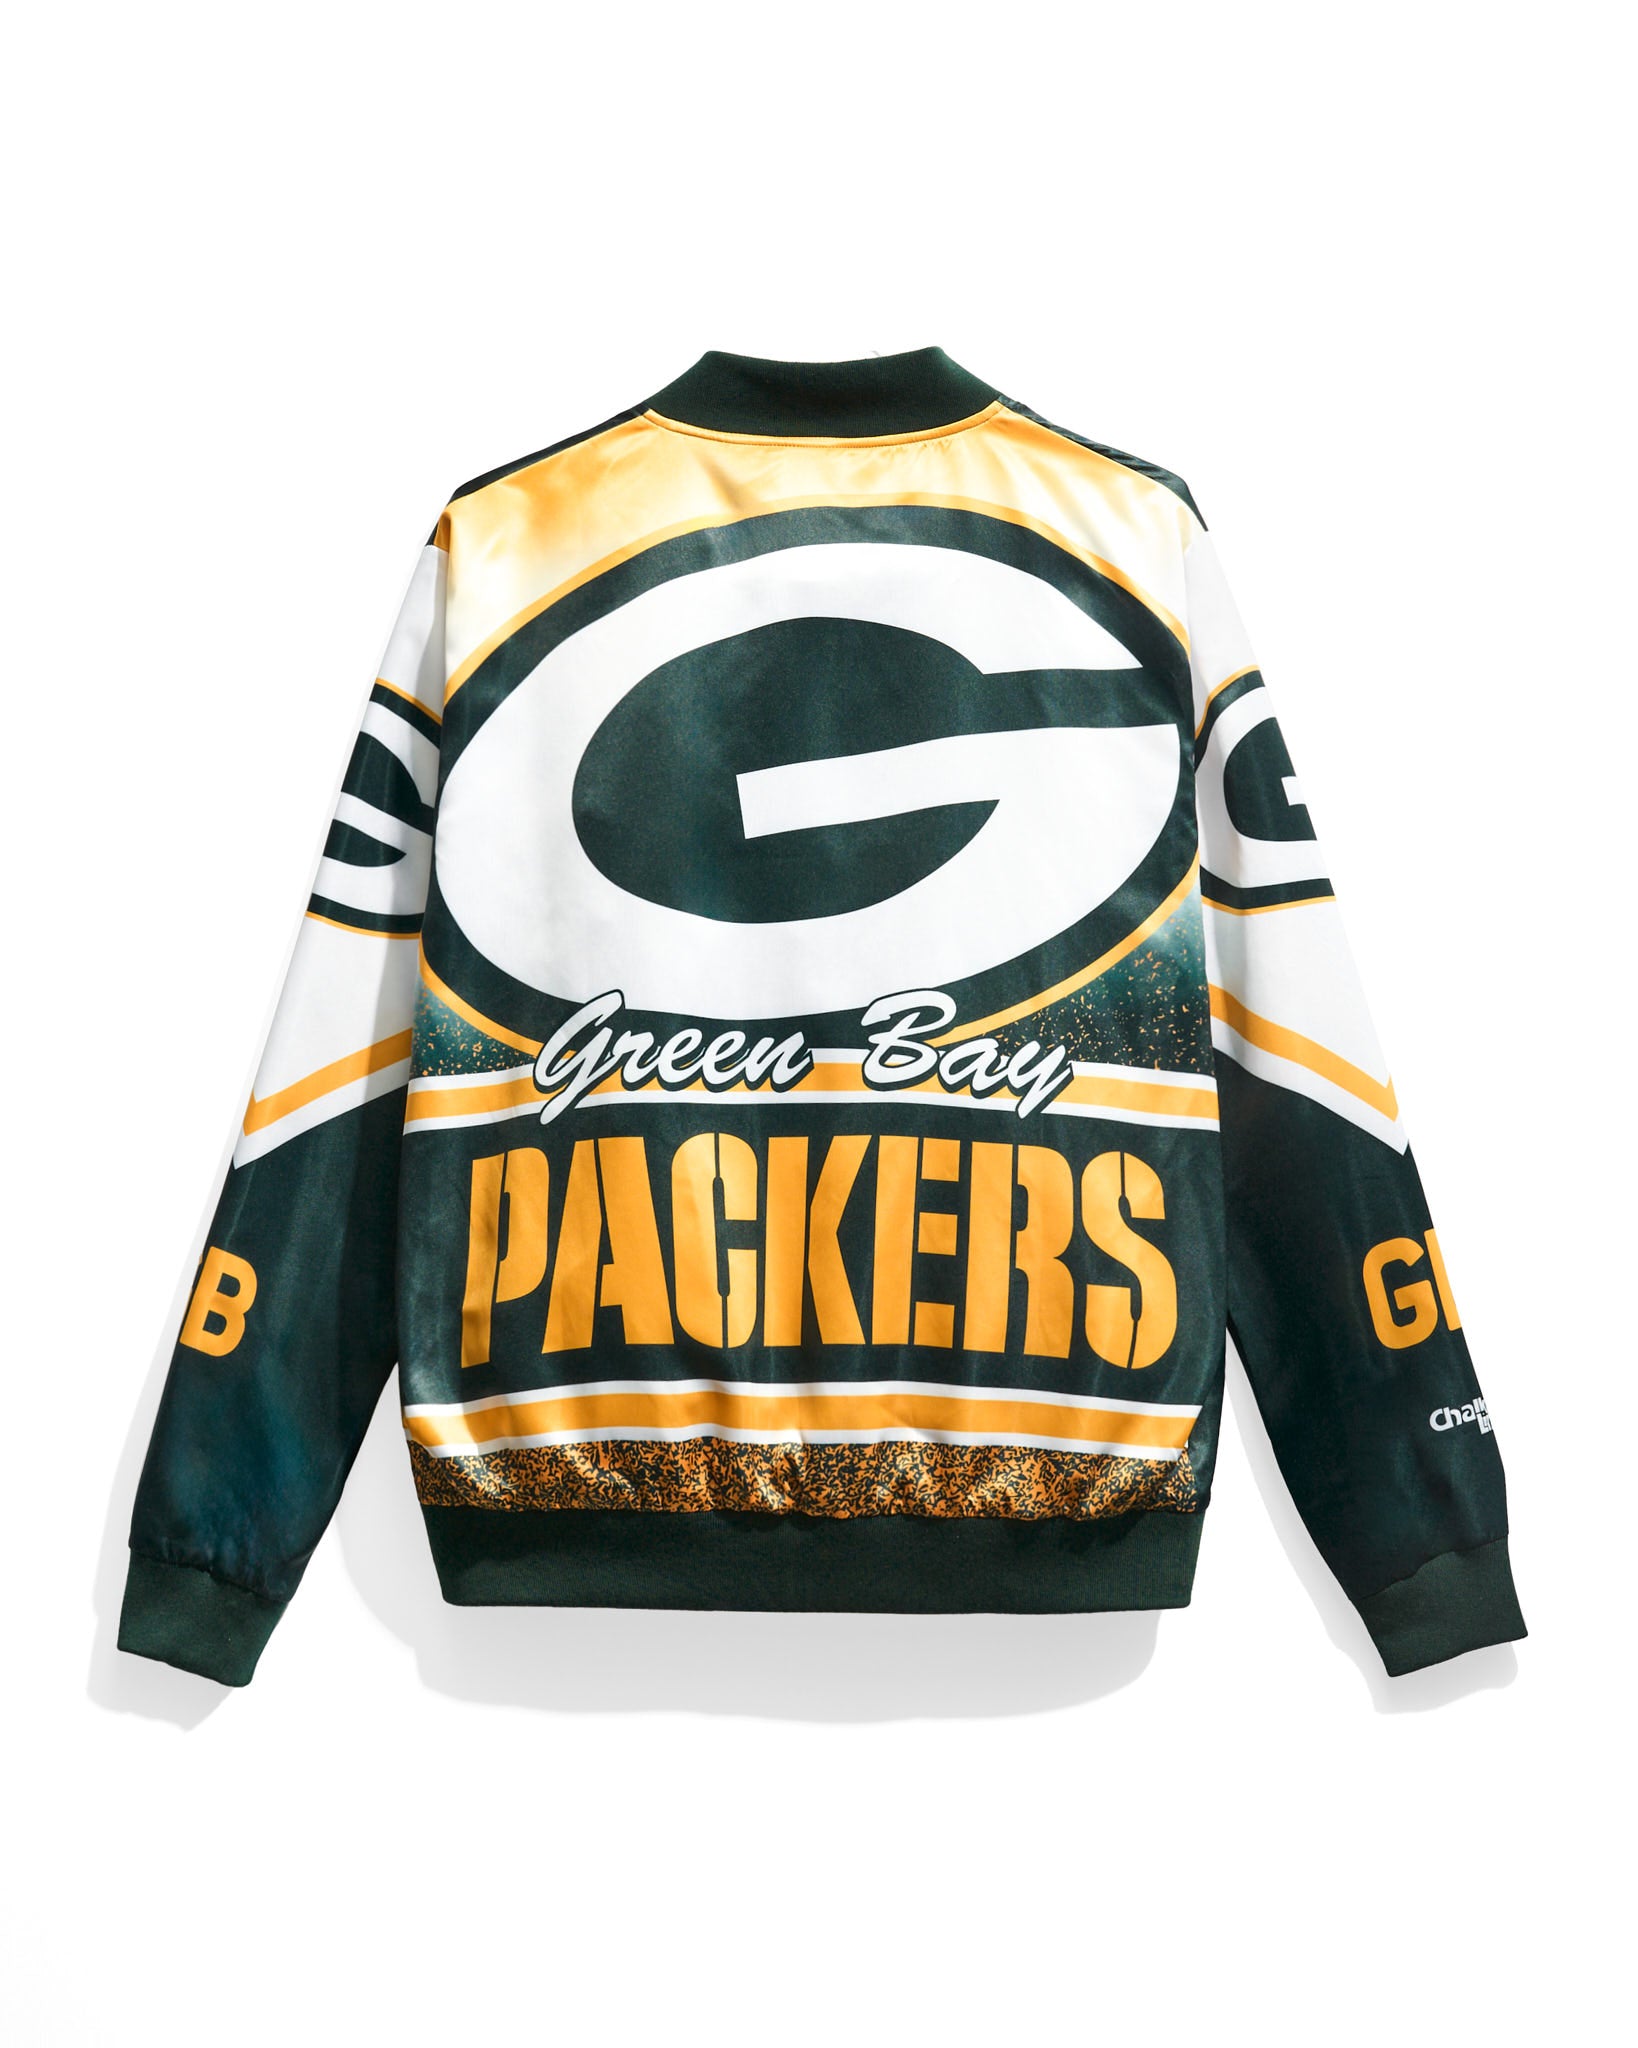 Green Bay Packers Jacket (XL)